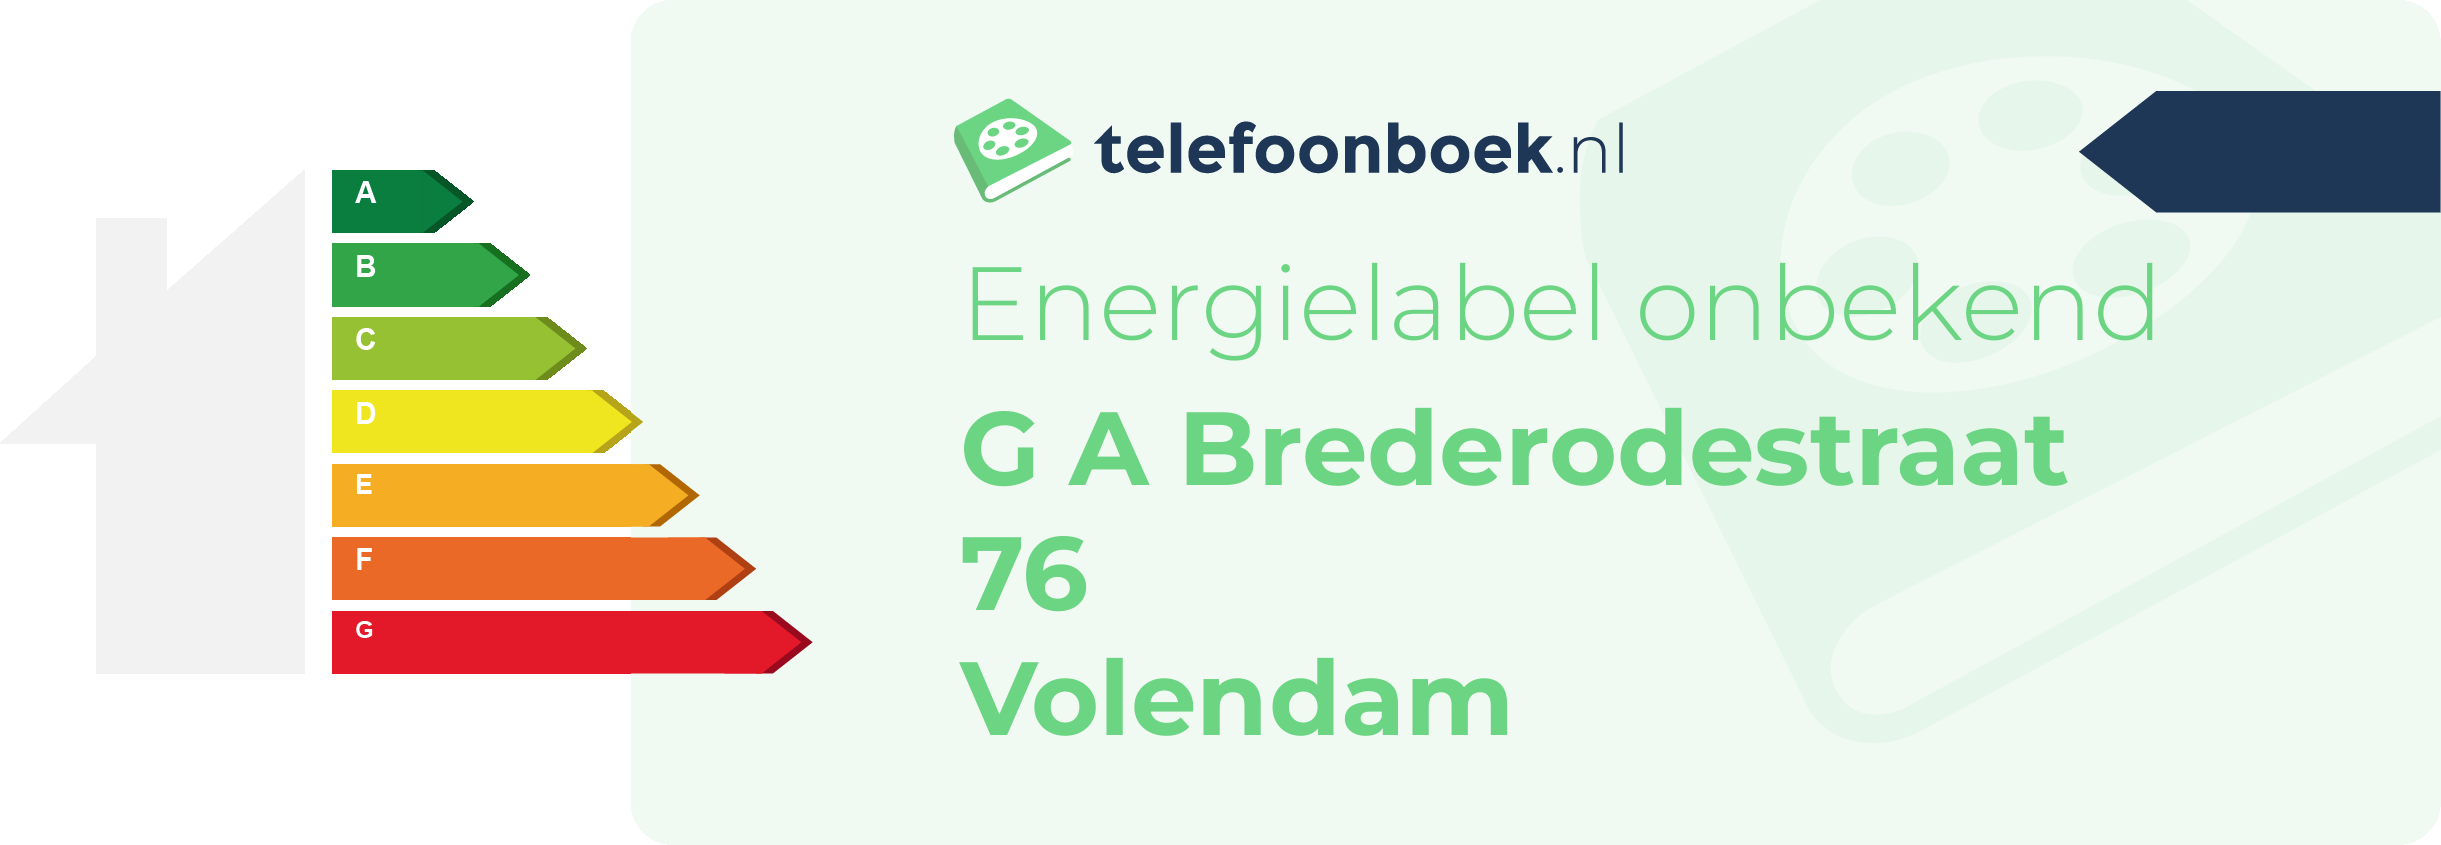 Energielabel G A Brederodestraat 76 Volendam